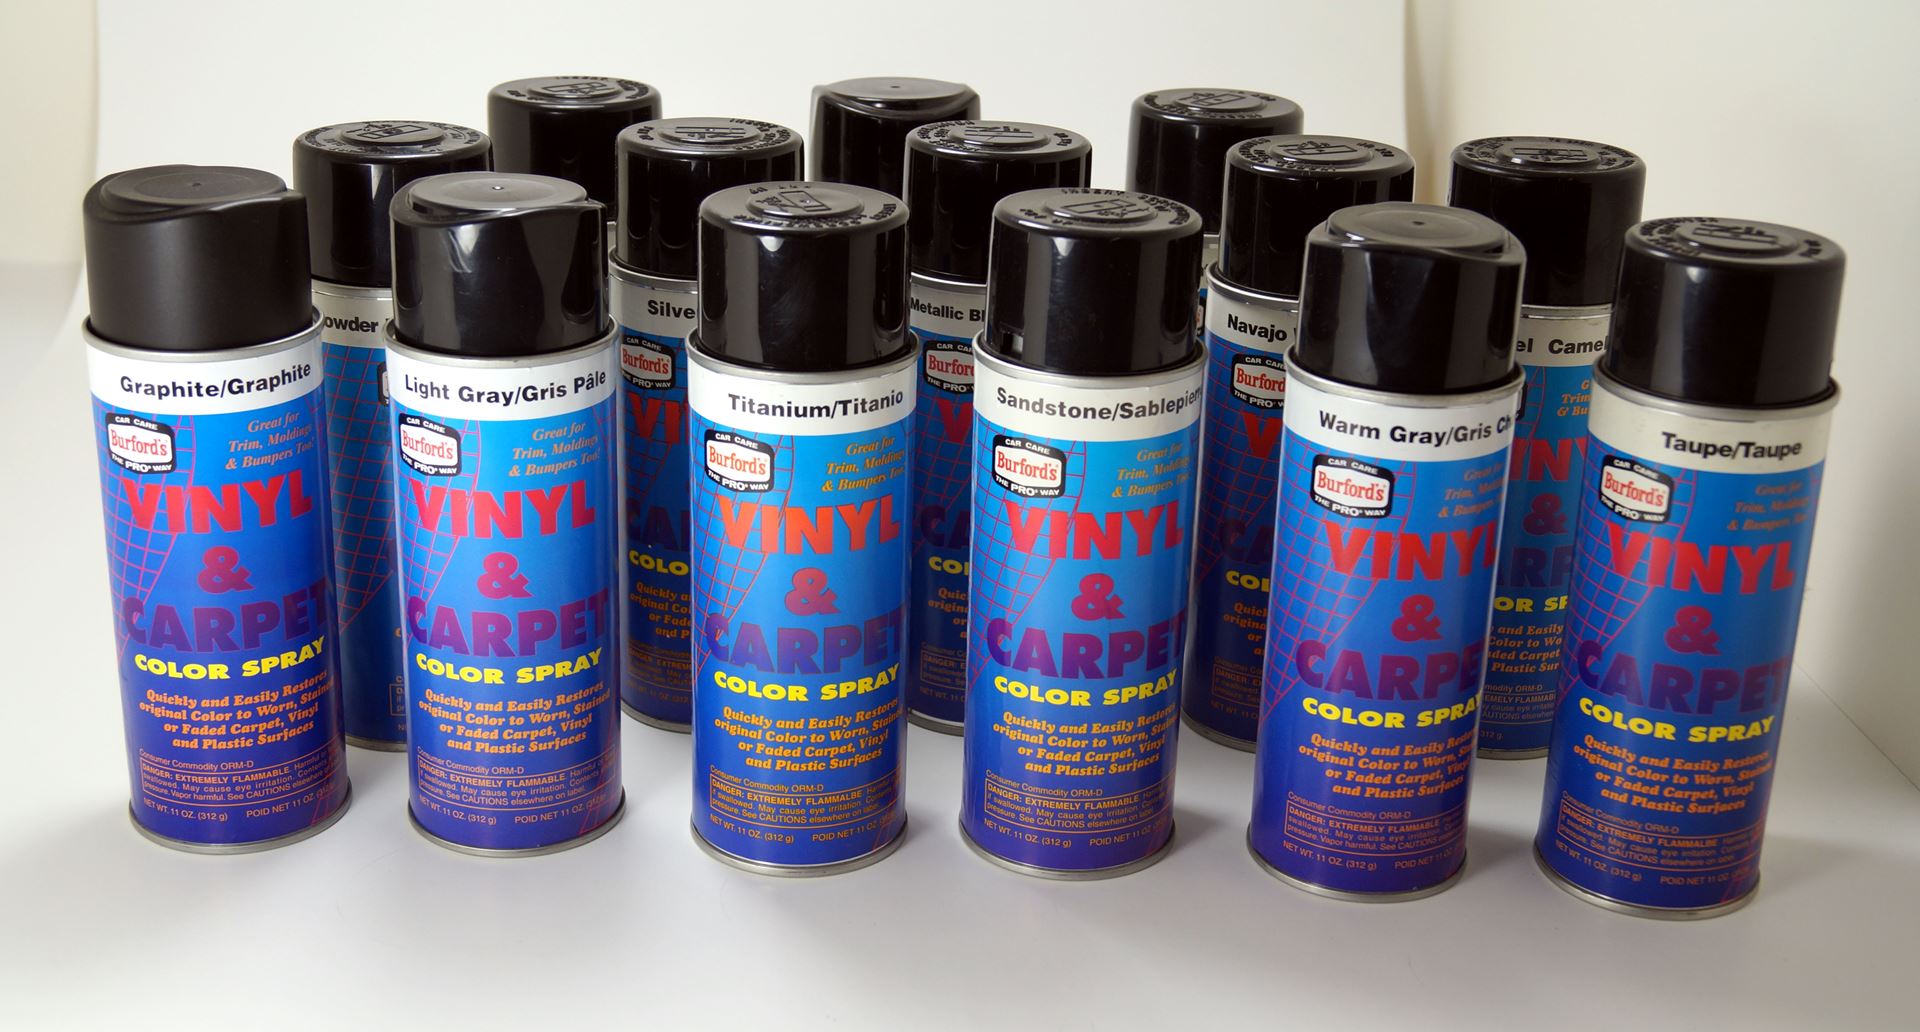 Solvent Resistant Sprayer w/ Bottle